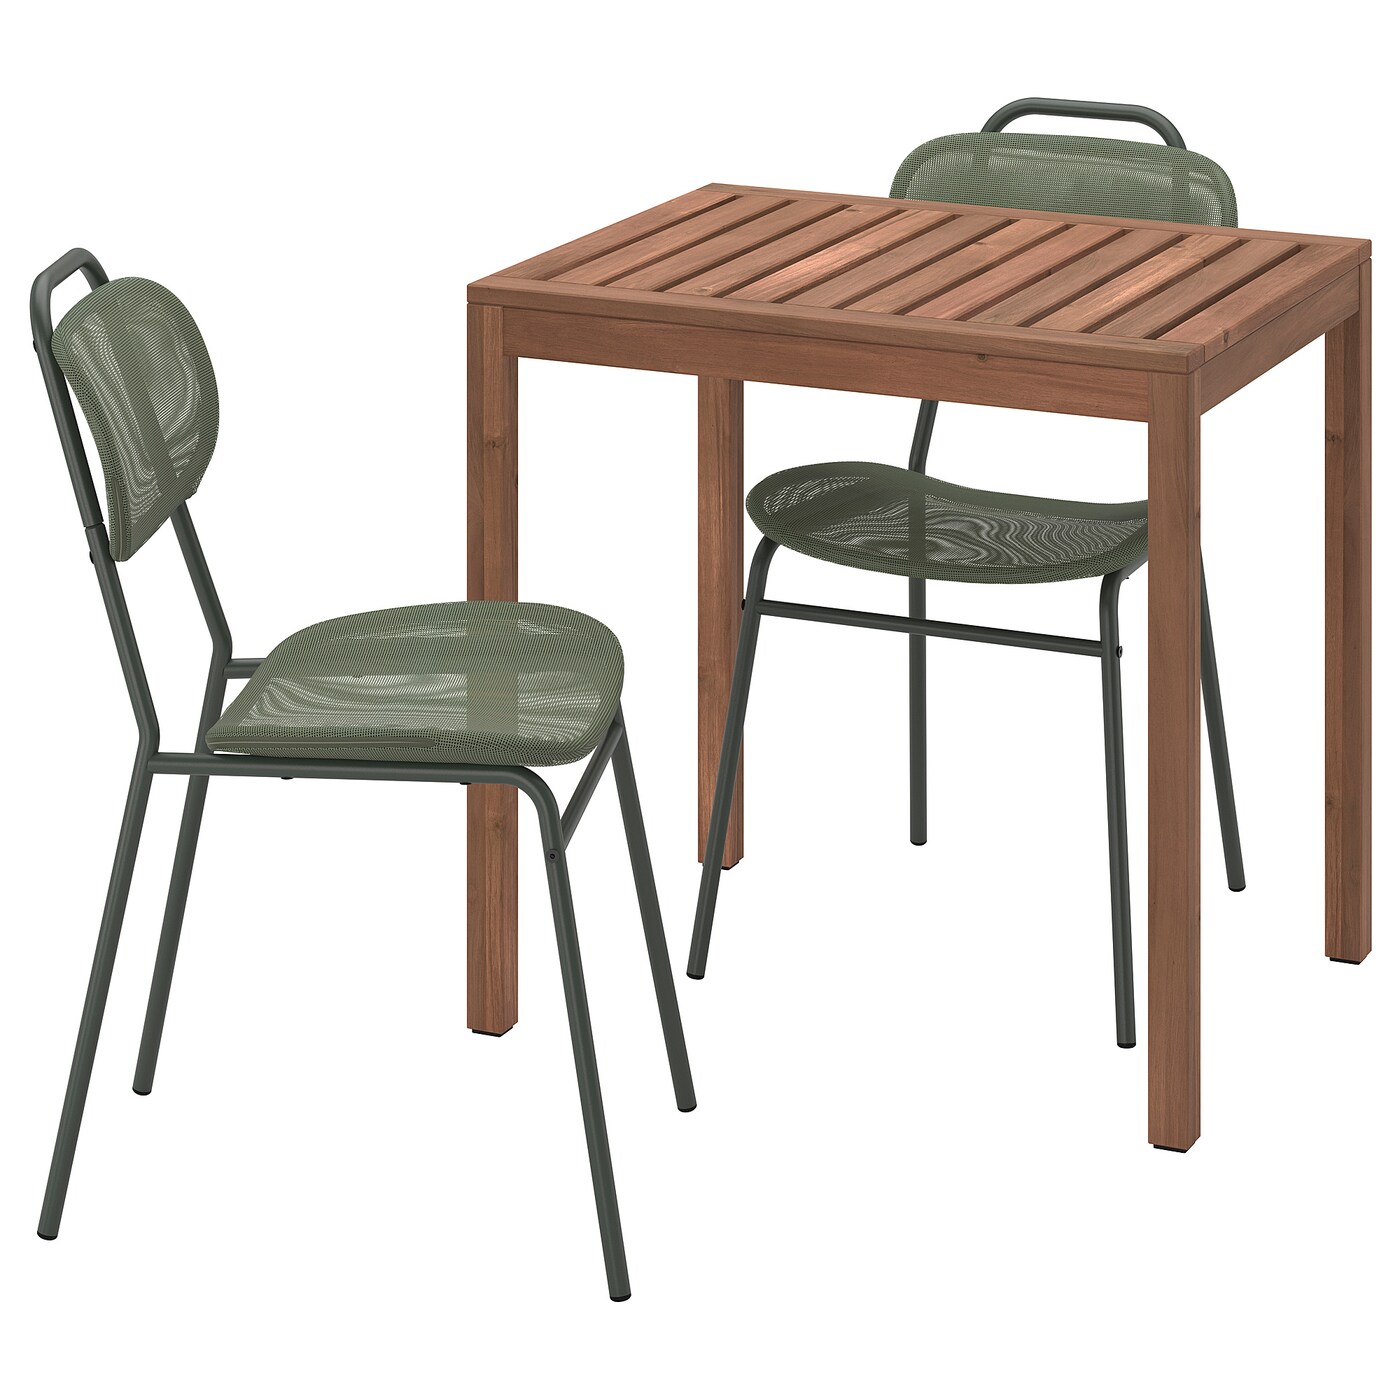 Стол + 2 стула -NÄMMARÖ / NАMMARО/ ENSHOLM  IKEA/  НАММАРО/ЭНШОЛЬП  ИКЕА,75х63 см, коричневый/зеленый